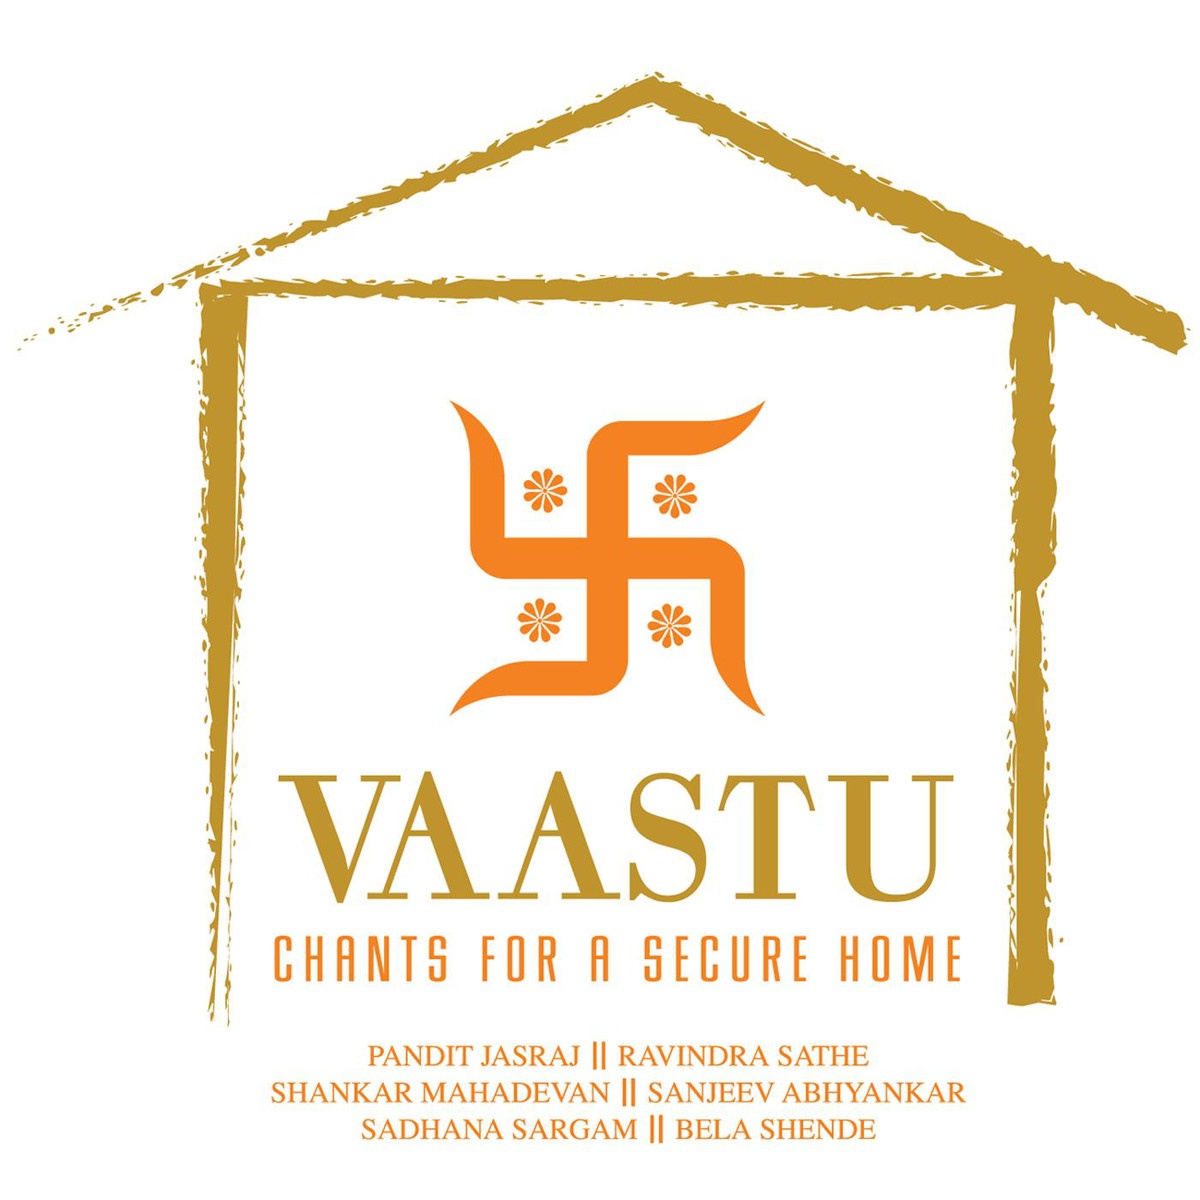 Vaastu - Chants For A Secure Home